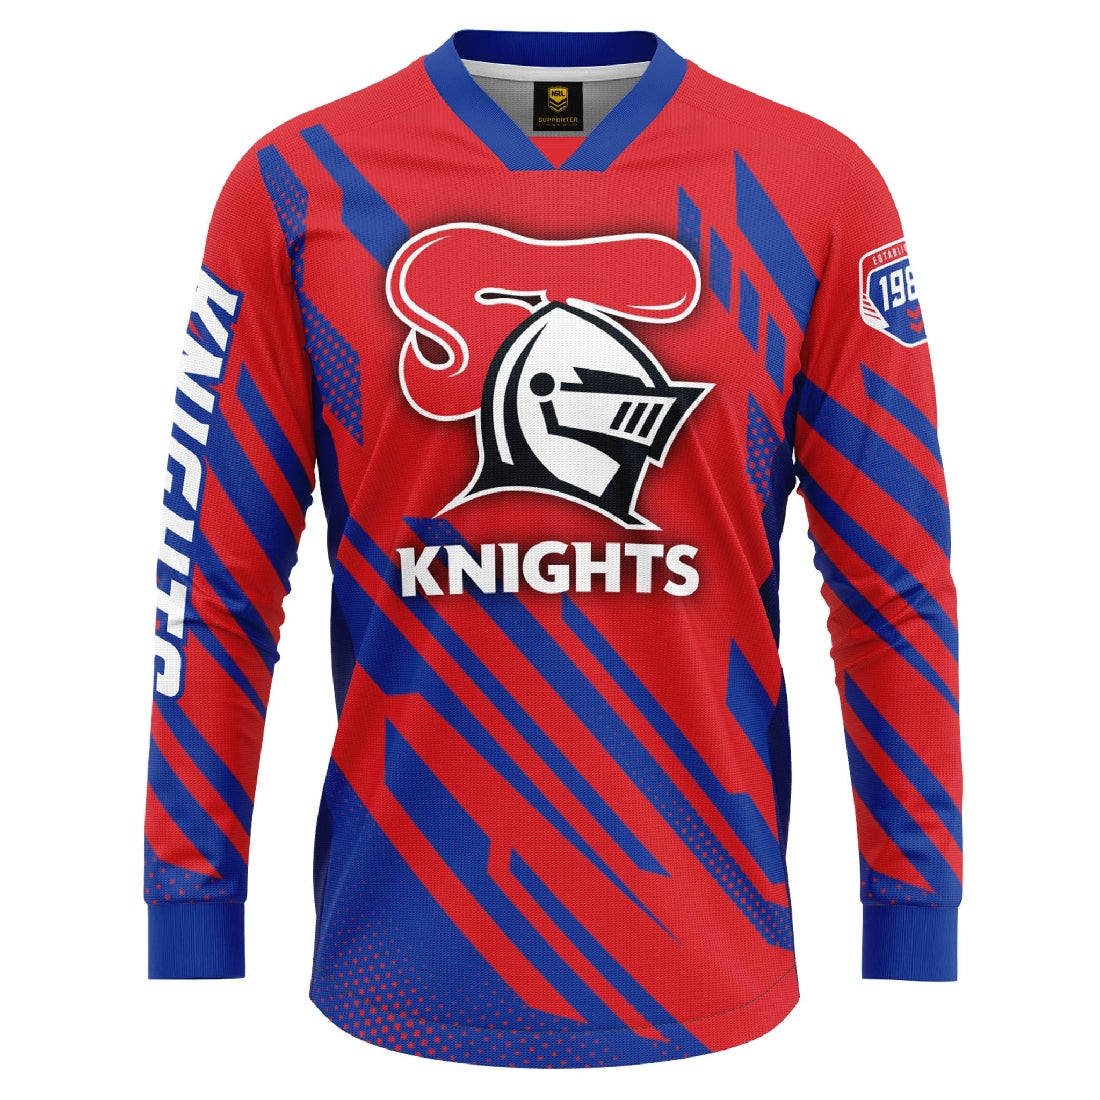 Newcastle Knights "Blitz: MX Jersey